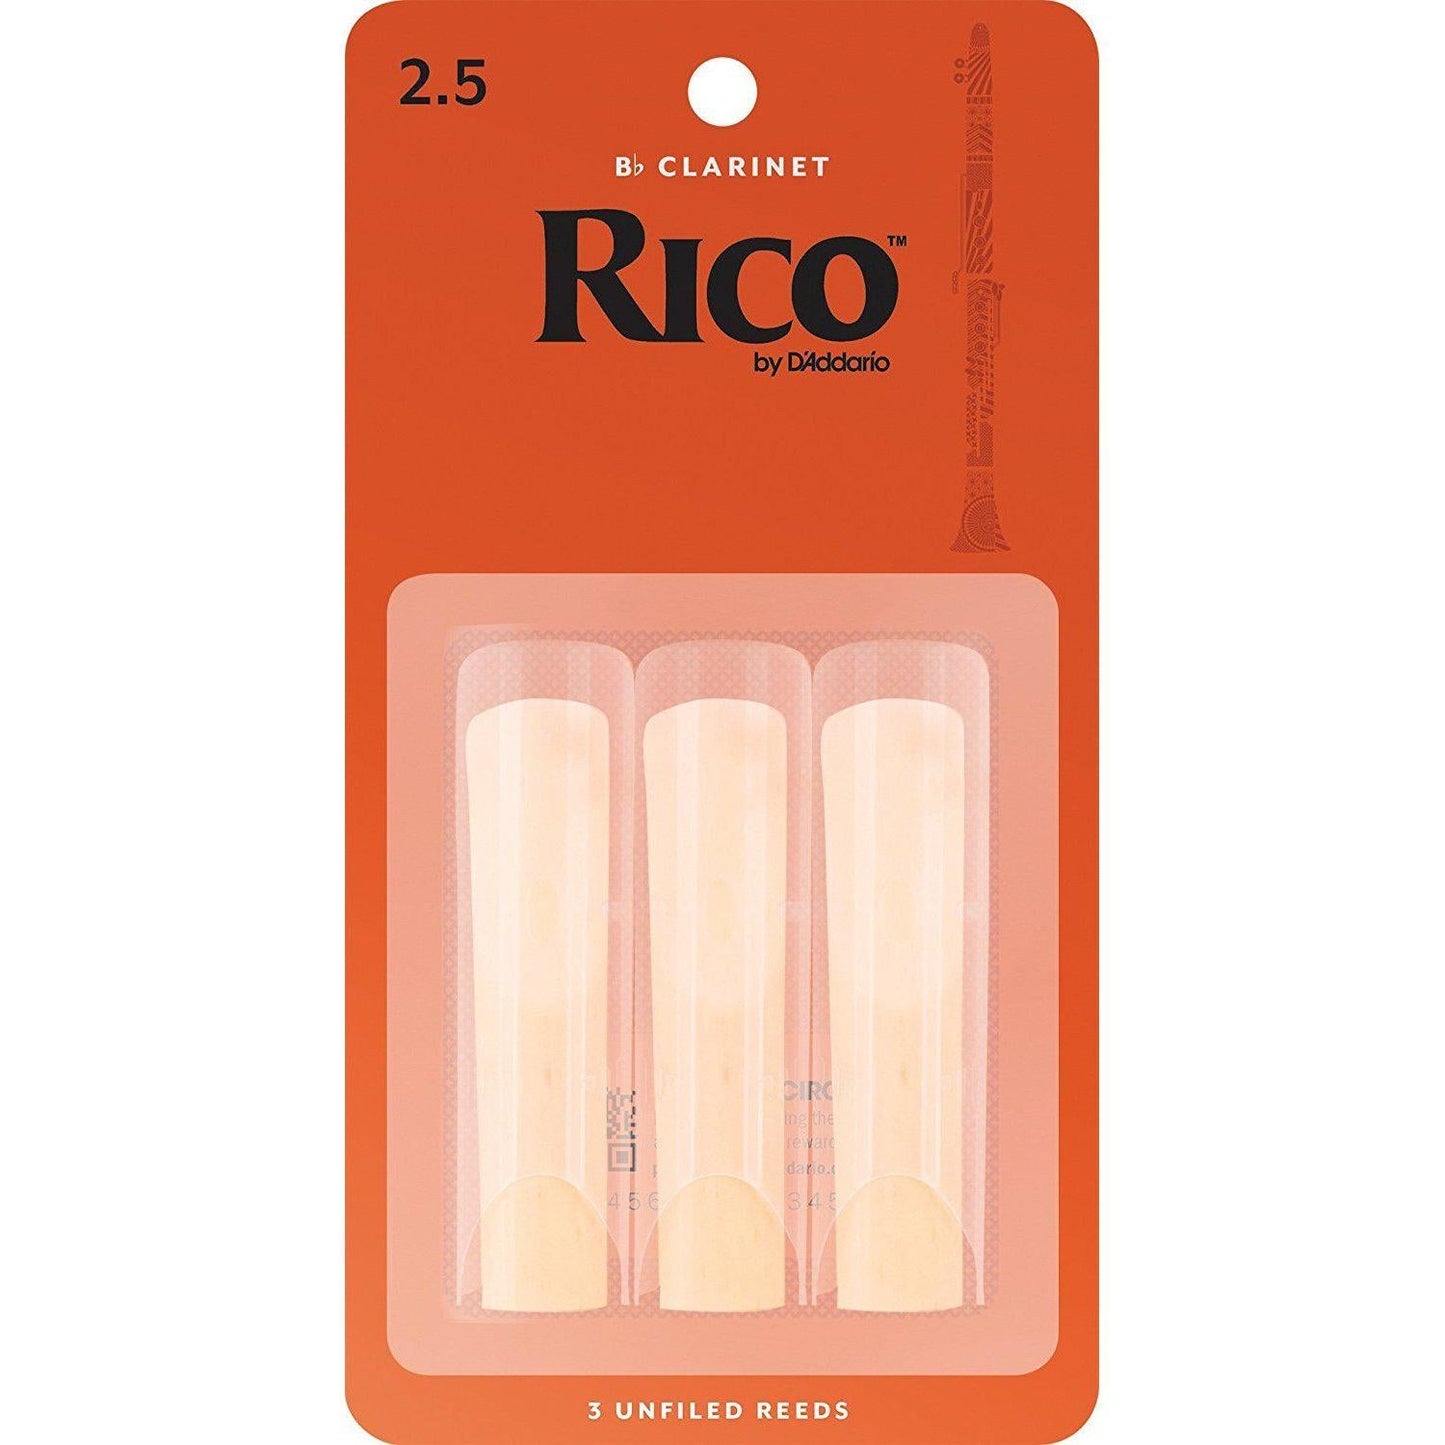 Rico by D'Addario Bb Clarinet Reeds - 2.5